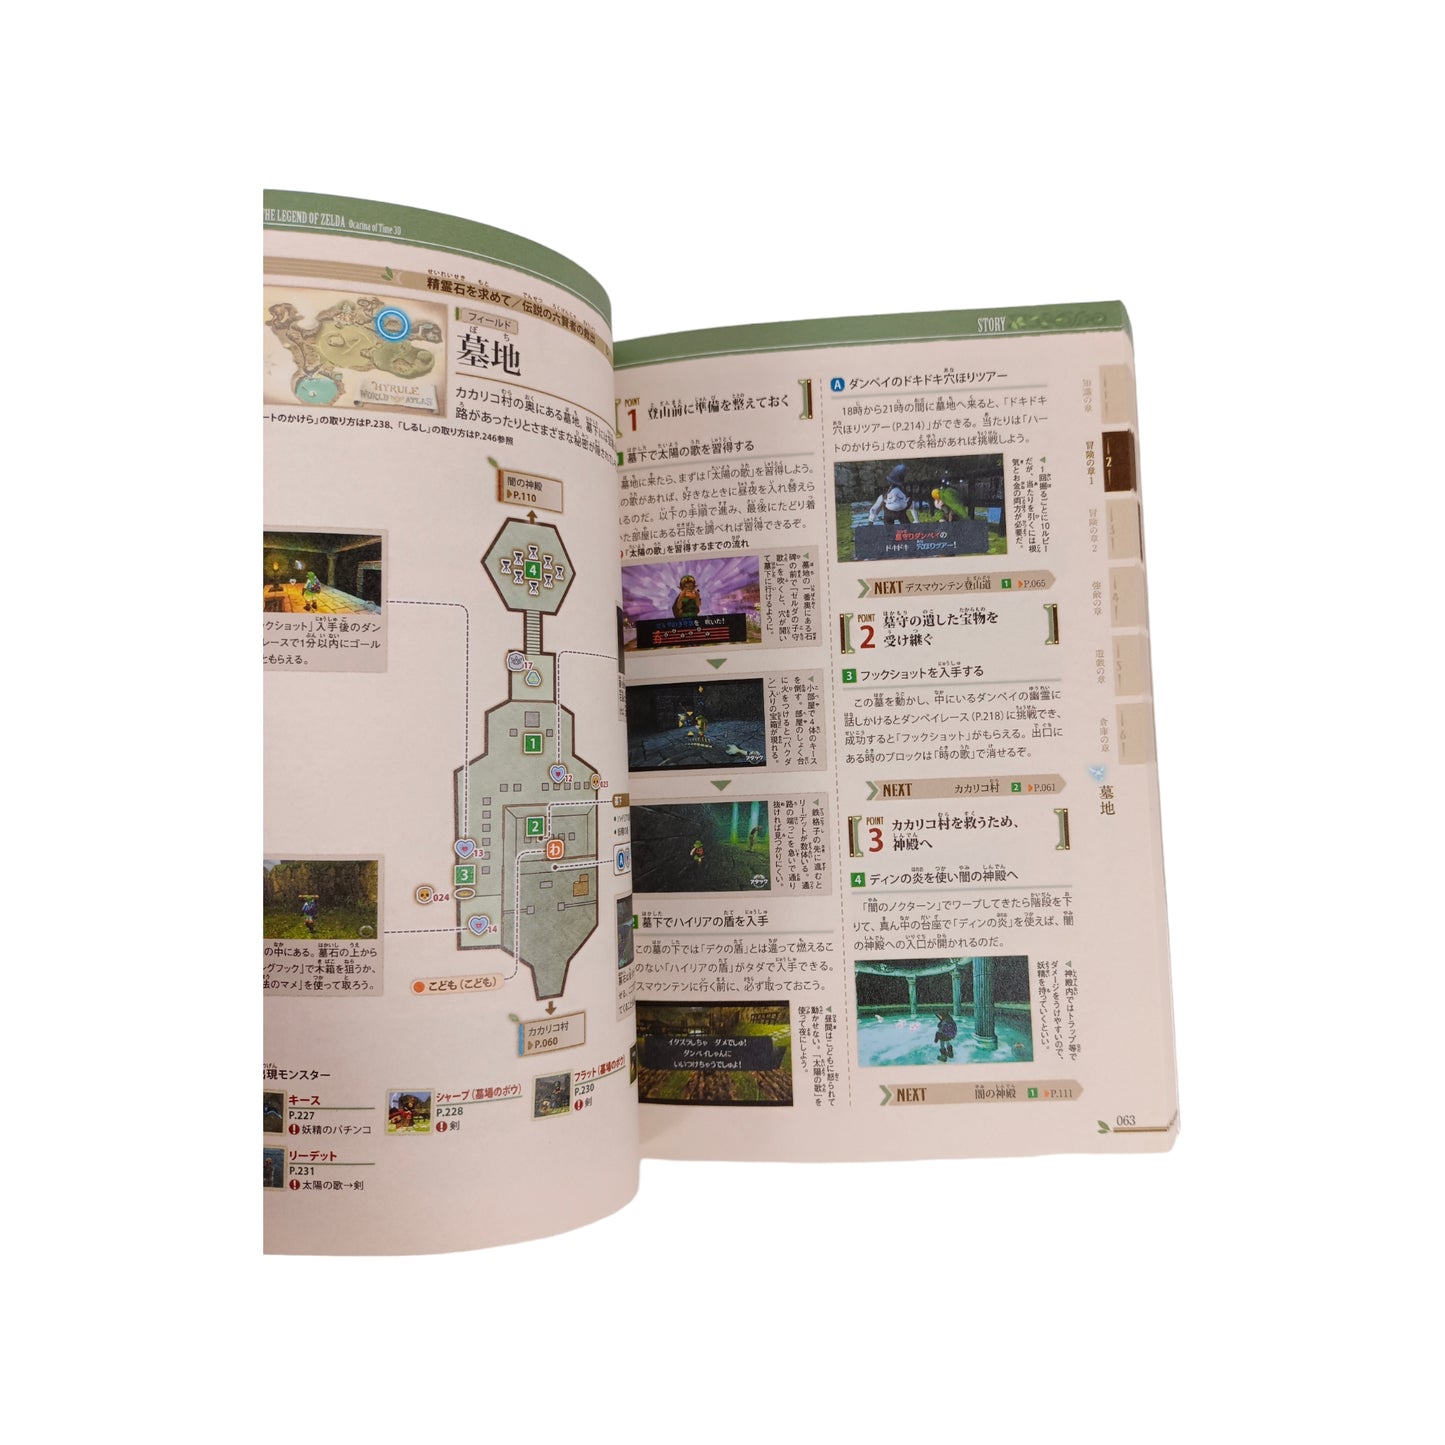 Guide Dengeki pour The Legend of Zelda Ocarina of Time 3D